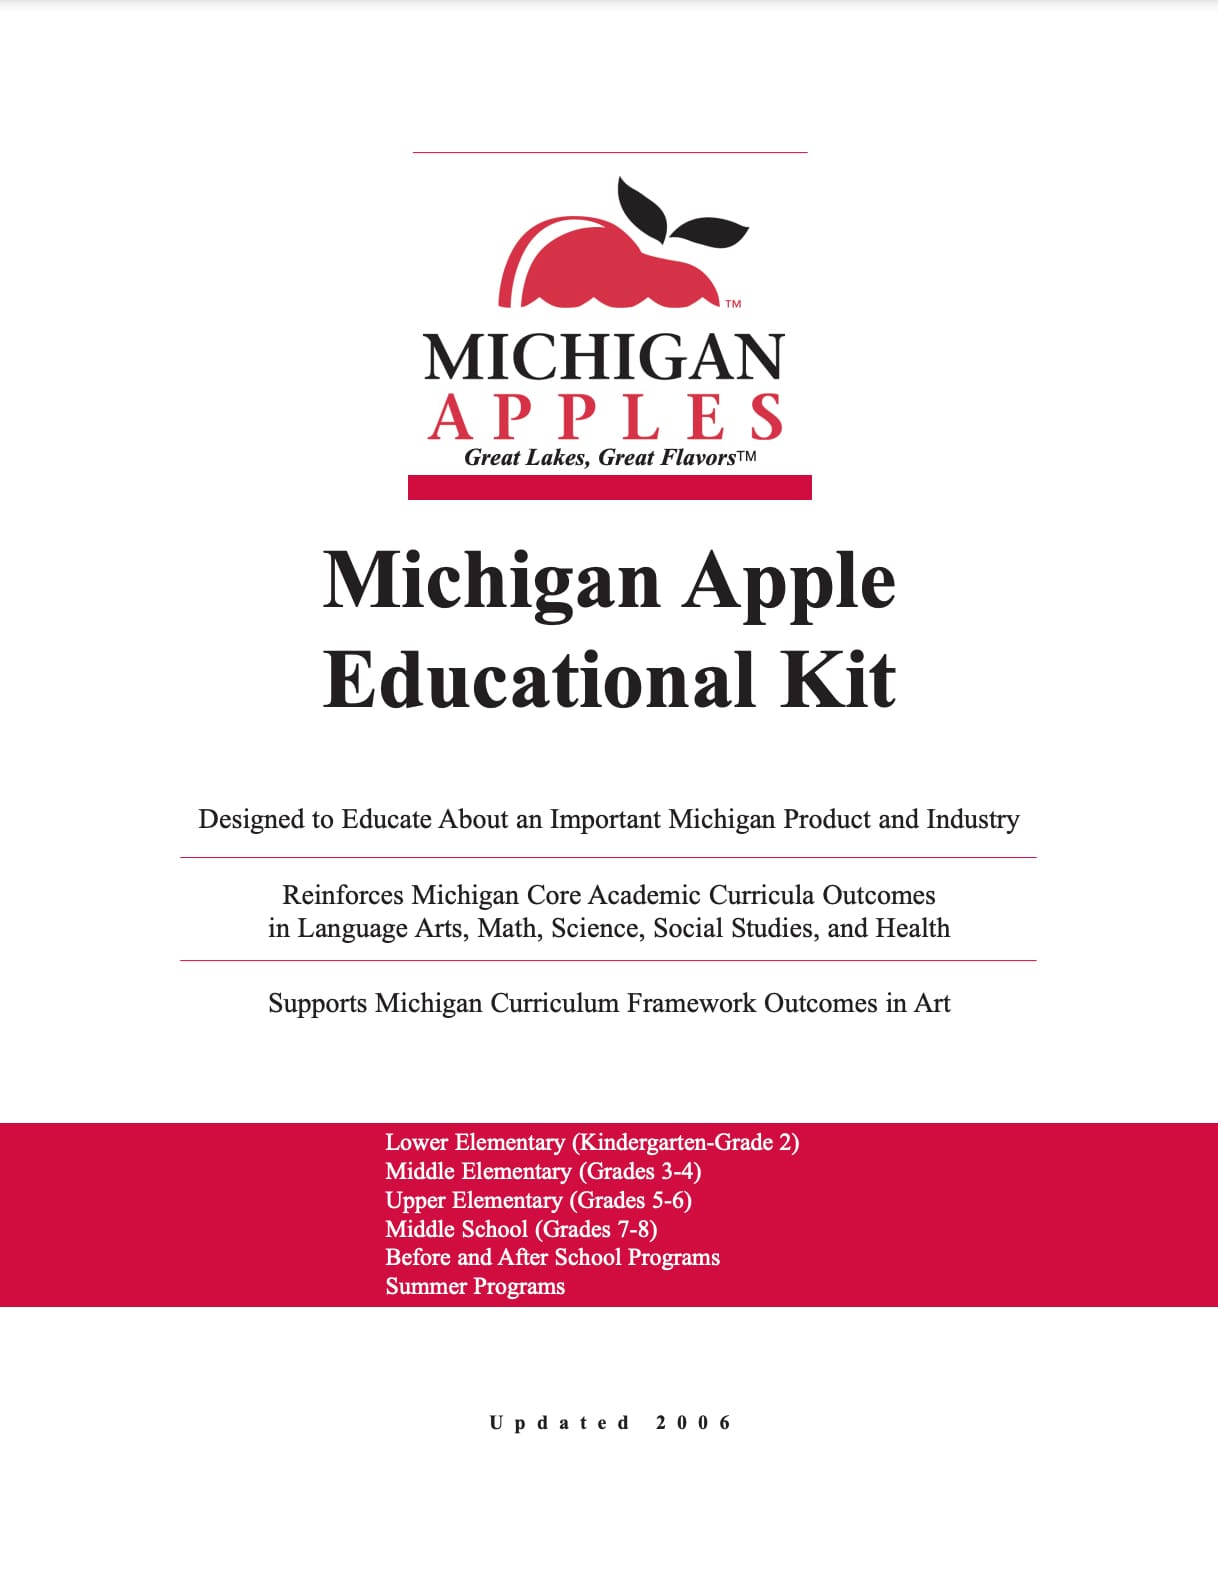 Michigan Apple Educational kit